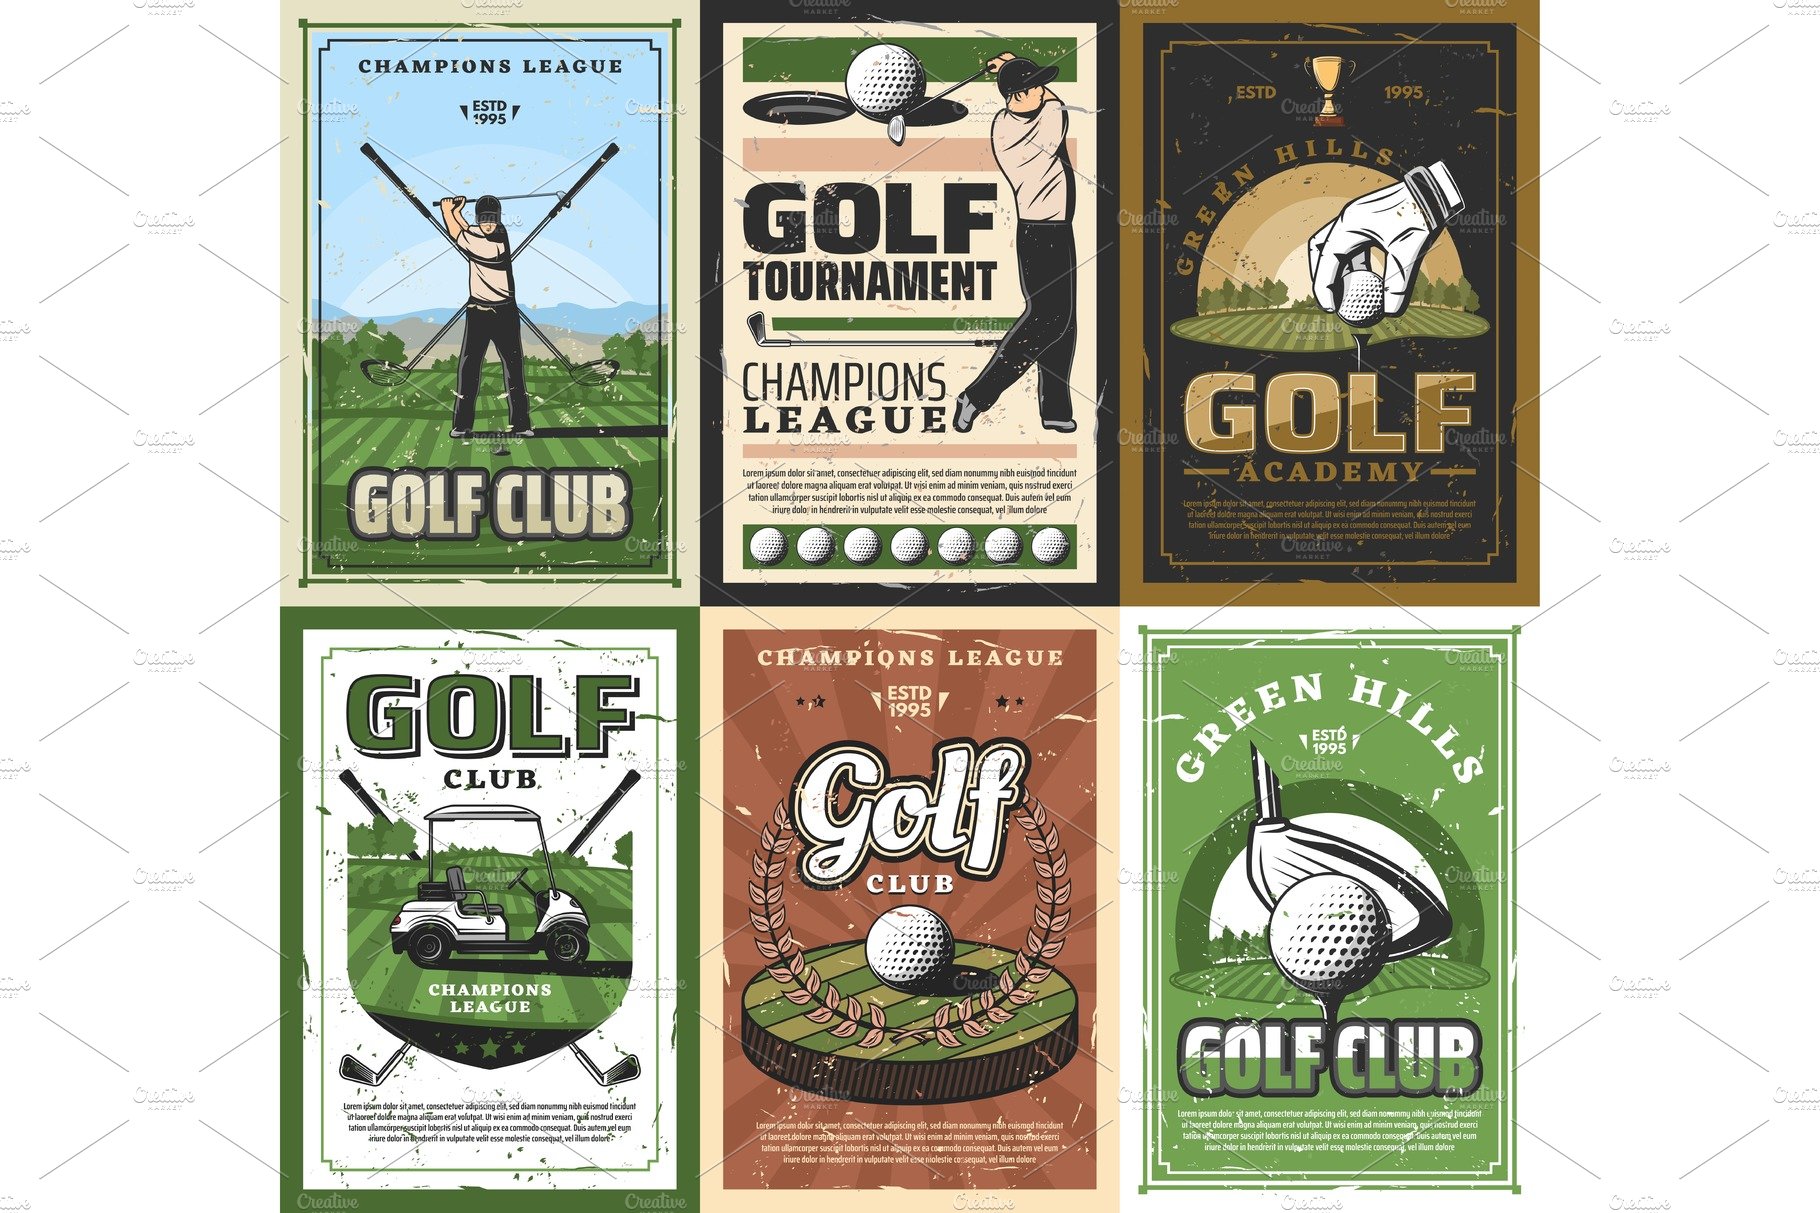 Golf club sport equipment cover image.